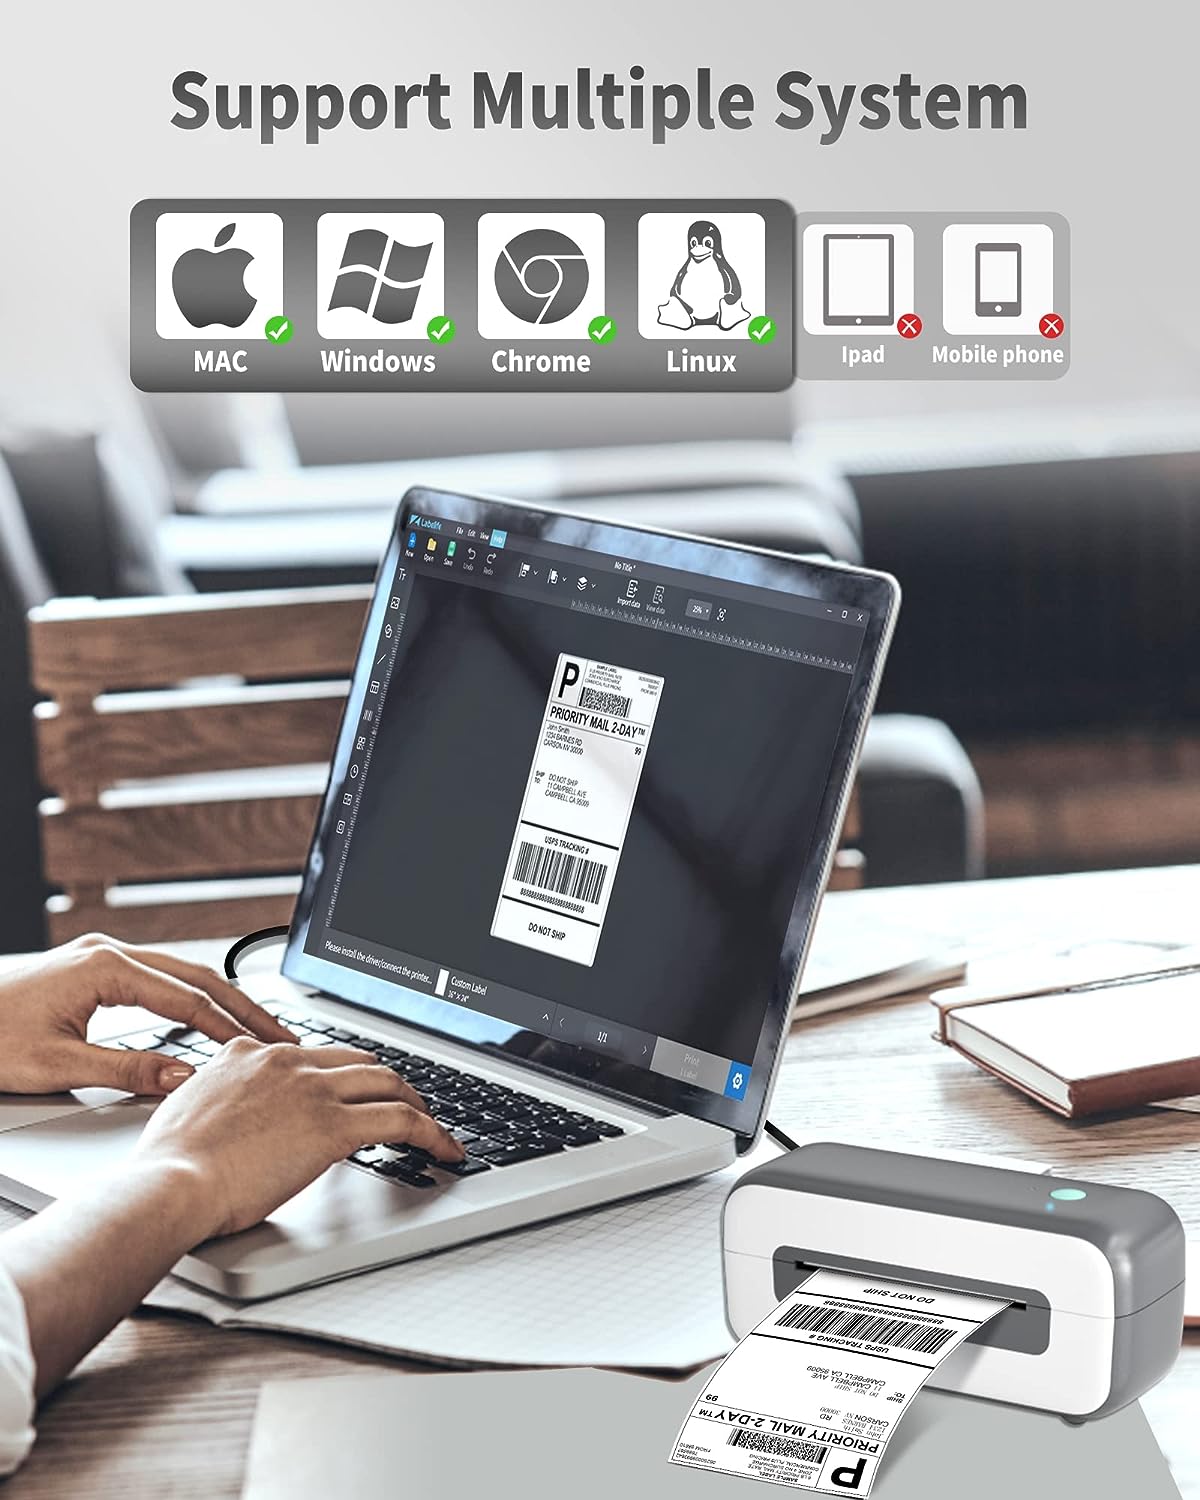 POWERFUL Thermal Label Printer, Shipping Label Printer, Desktop Label Printer for Mac Windows Chromebook, Thermal Printer Compatible with Amazon, Ebay, Shopify, Etsy, UPS, FedEx, DHL